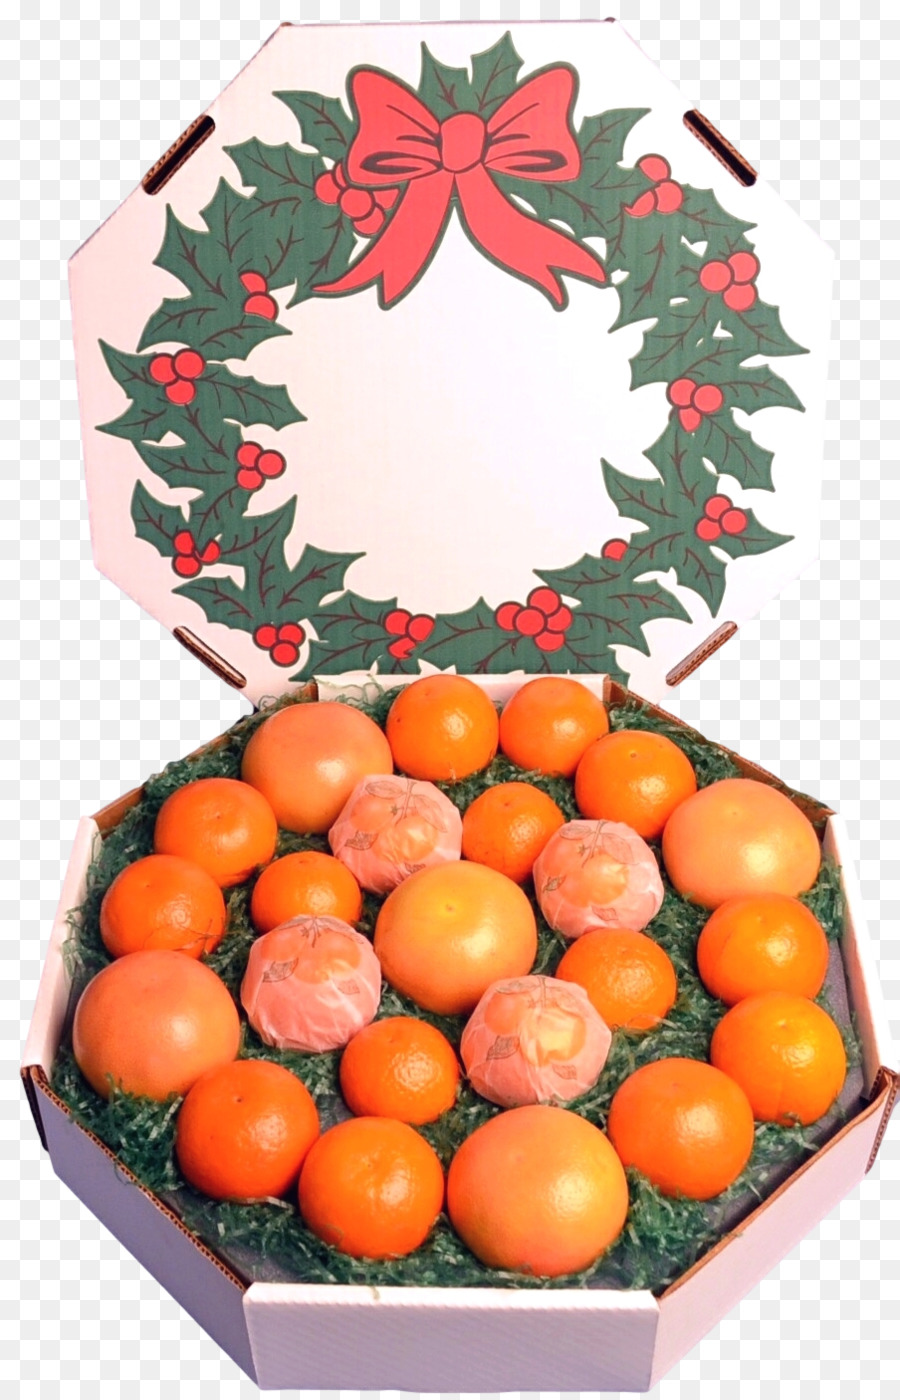 Tangerine, Mandarin orange, Clementine Florida - Grapefruit